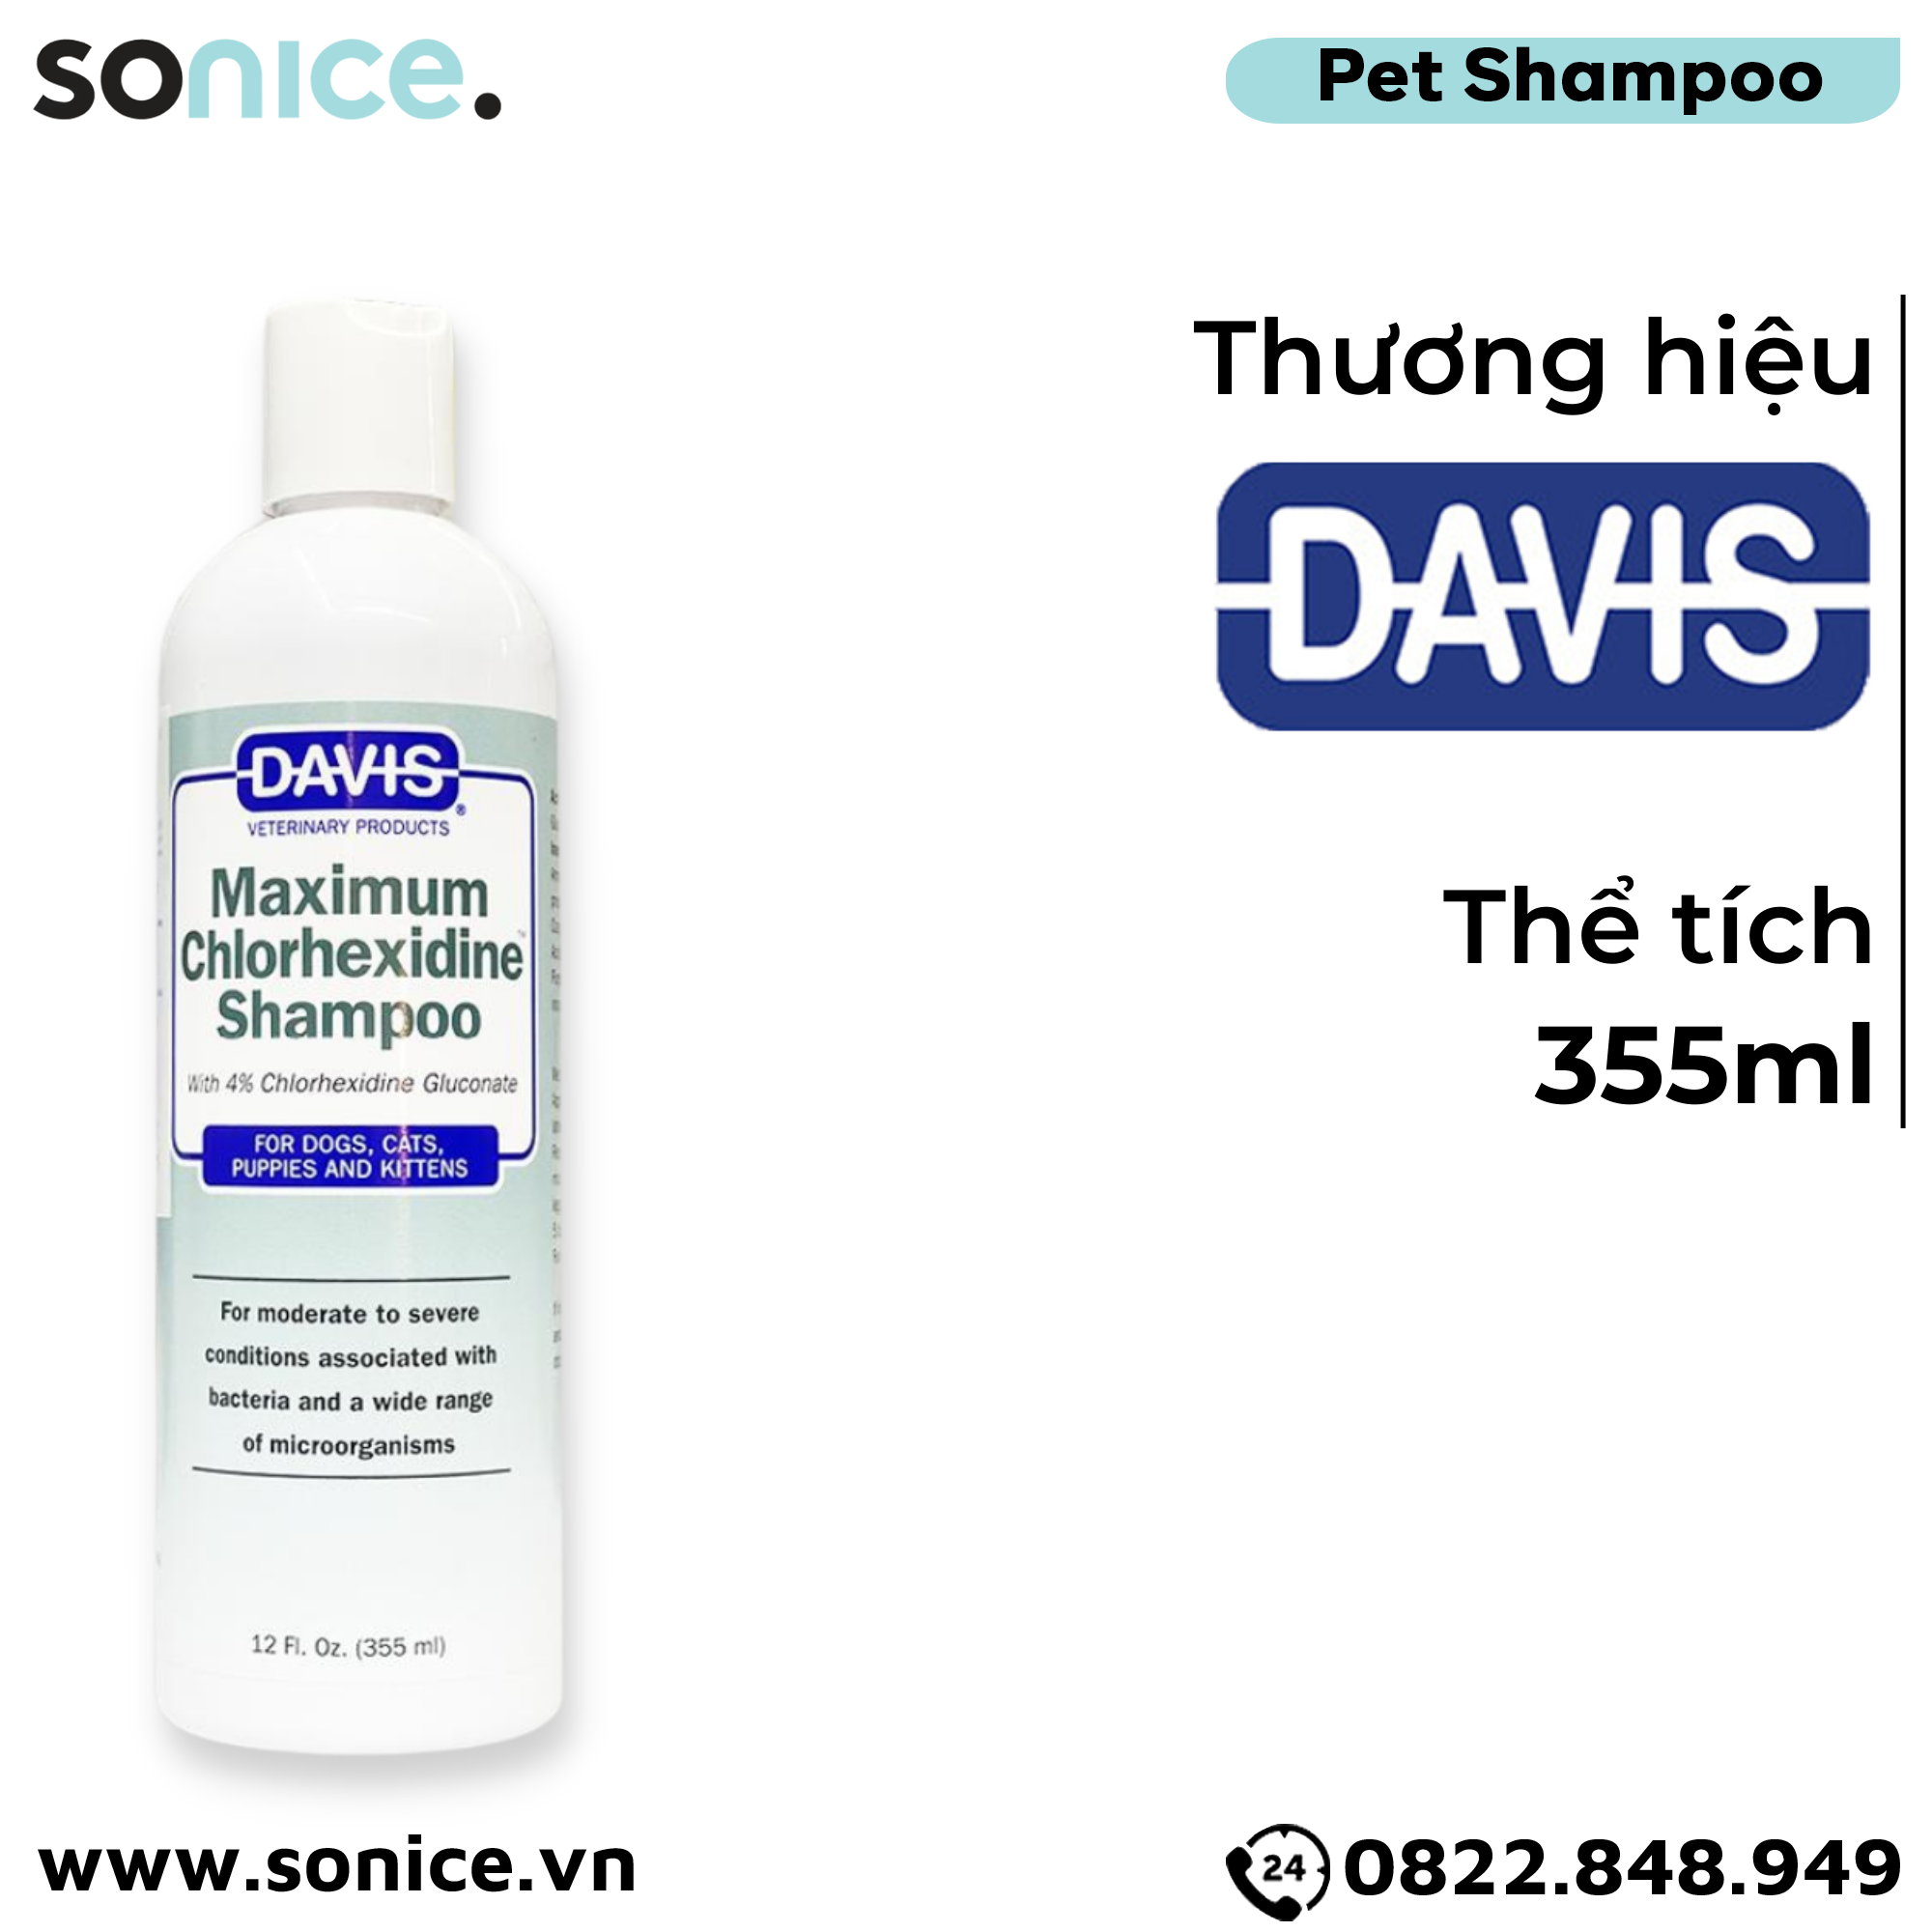  Sữa tắm DAVIS Maximum Chlorhexidine with 4% Chlorhexidine Gluconate Shampoo 355ml - Hỗ trợ giảm ngứa, mùi hôi SONICE. 